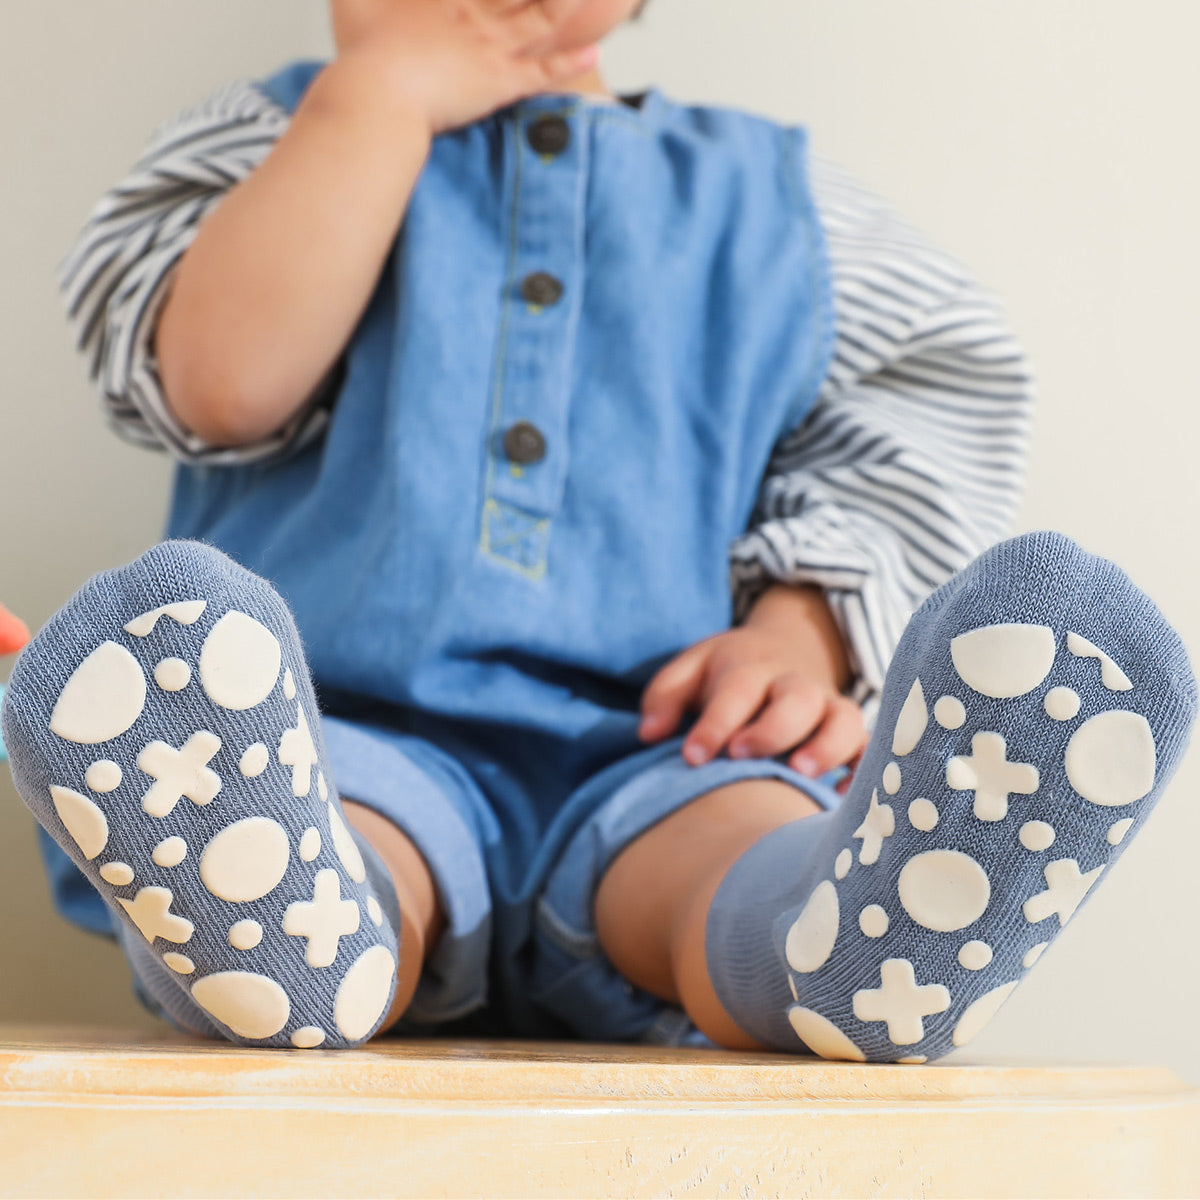 Dream Lifestyle 5Pairs Baby Non Slip Socks Toddler Socks With